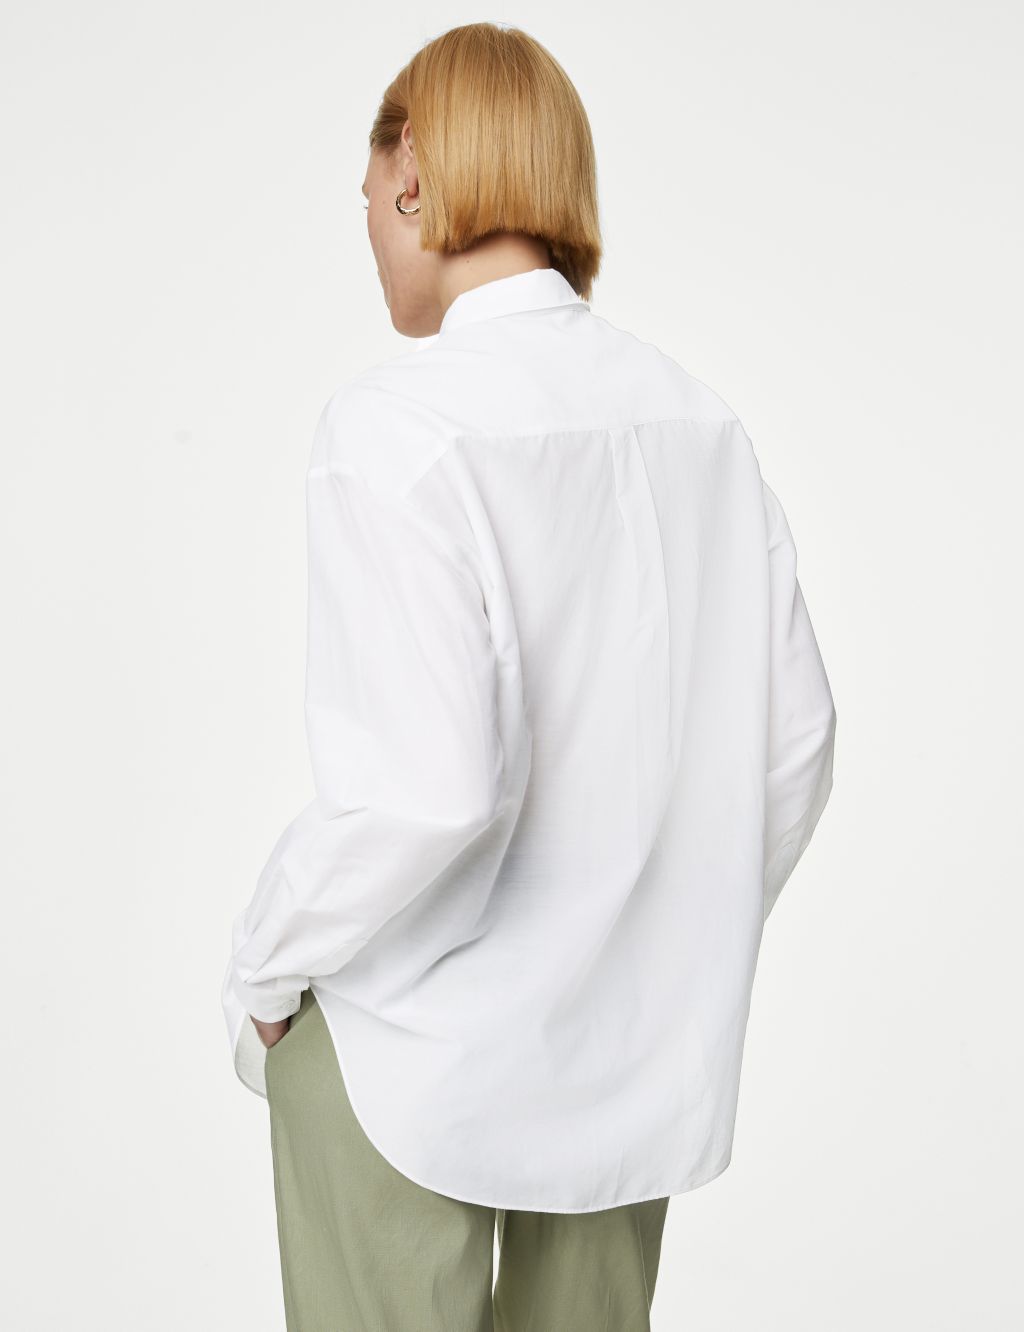 Silk Blend Collared Long Sleeve Shirt image 5